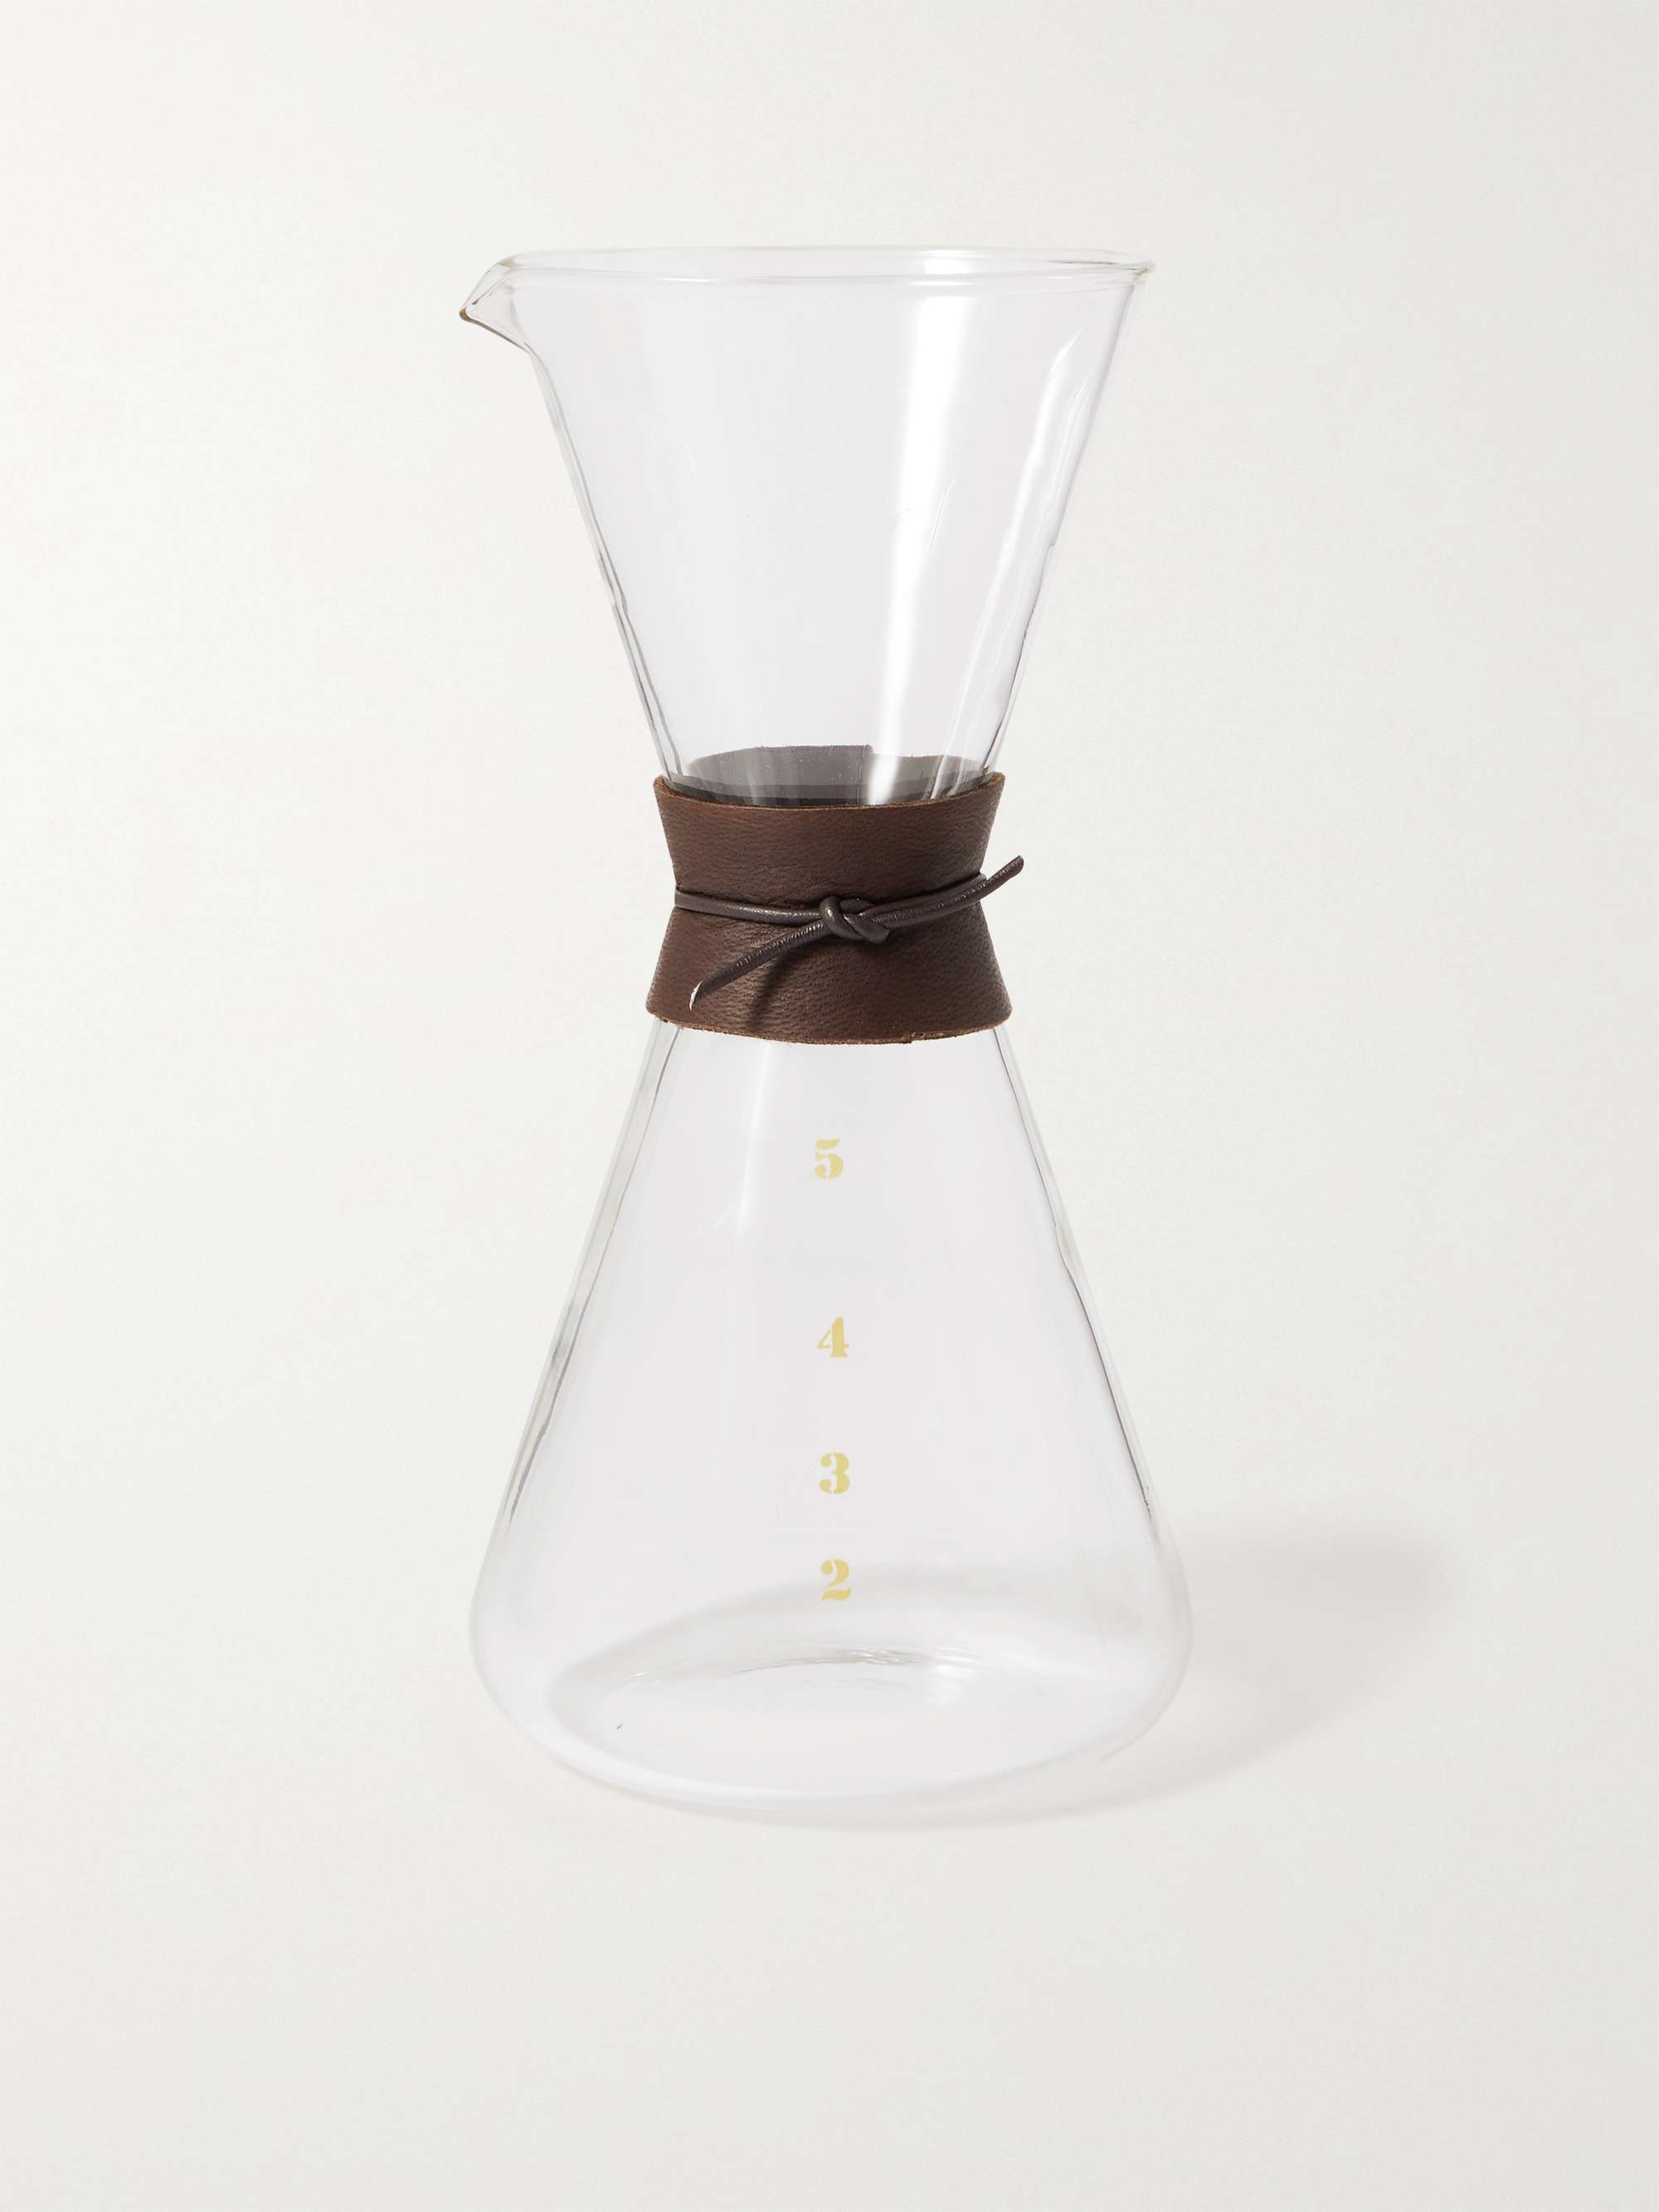 BY JAPAN + Koizumi Glass Minowa 2-Chome Glass and Leather Coffee Pot